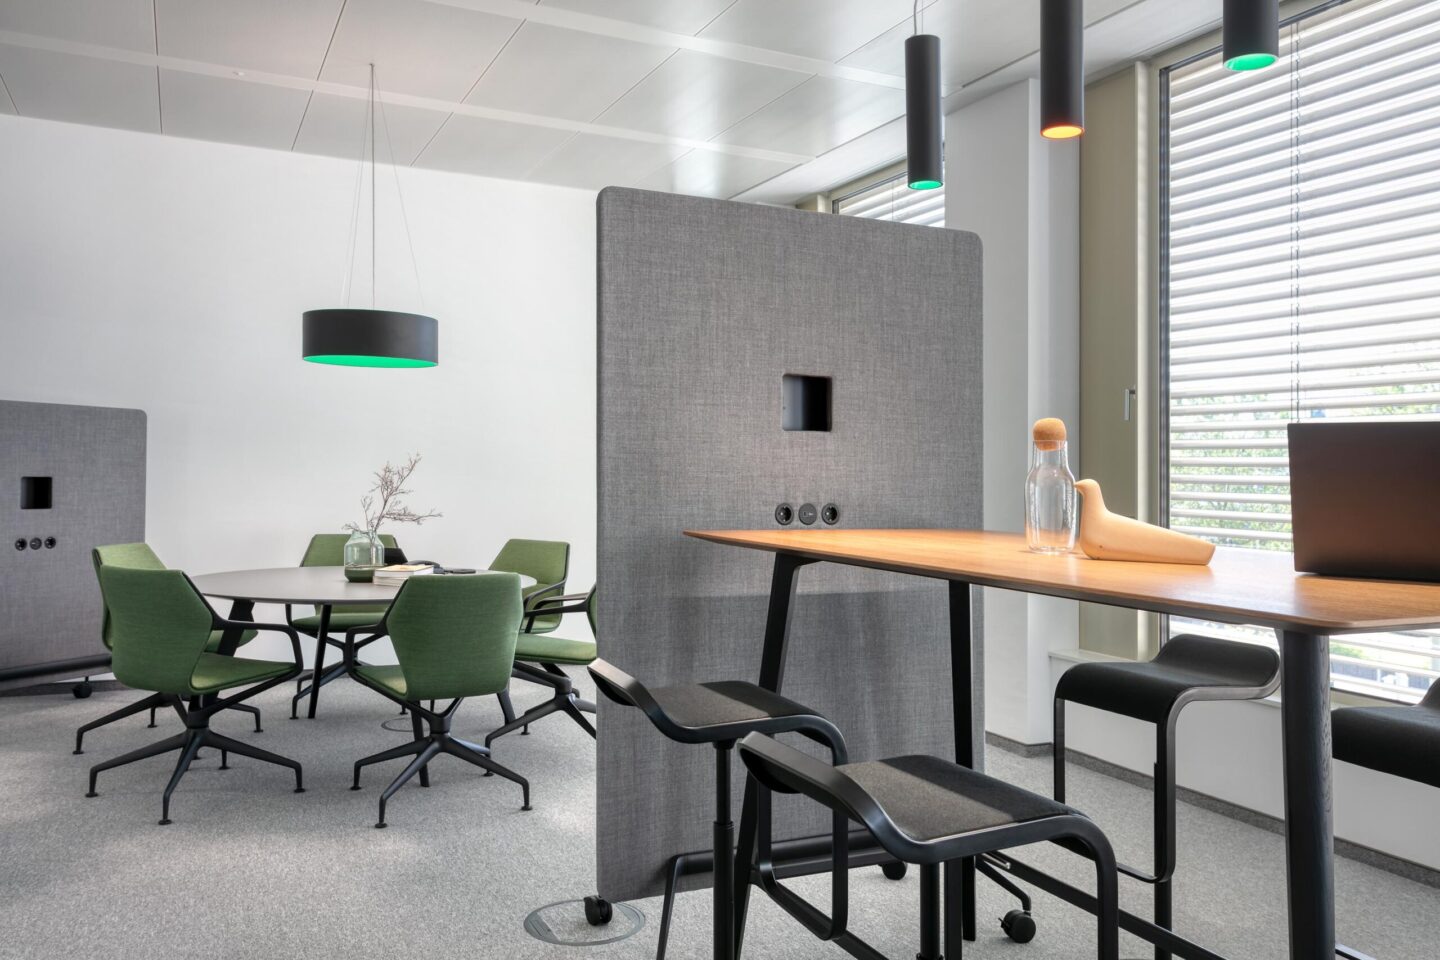 Kolb & Zerweck tax consultants │ meeting rooms │ comfortable furnishings